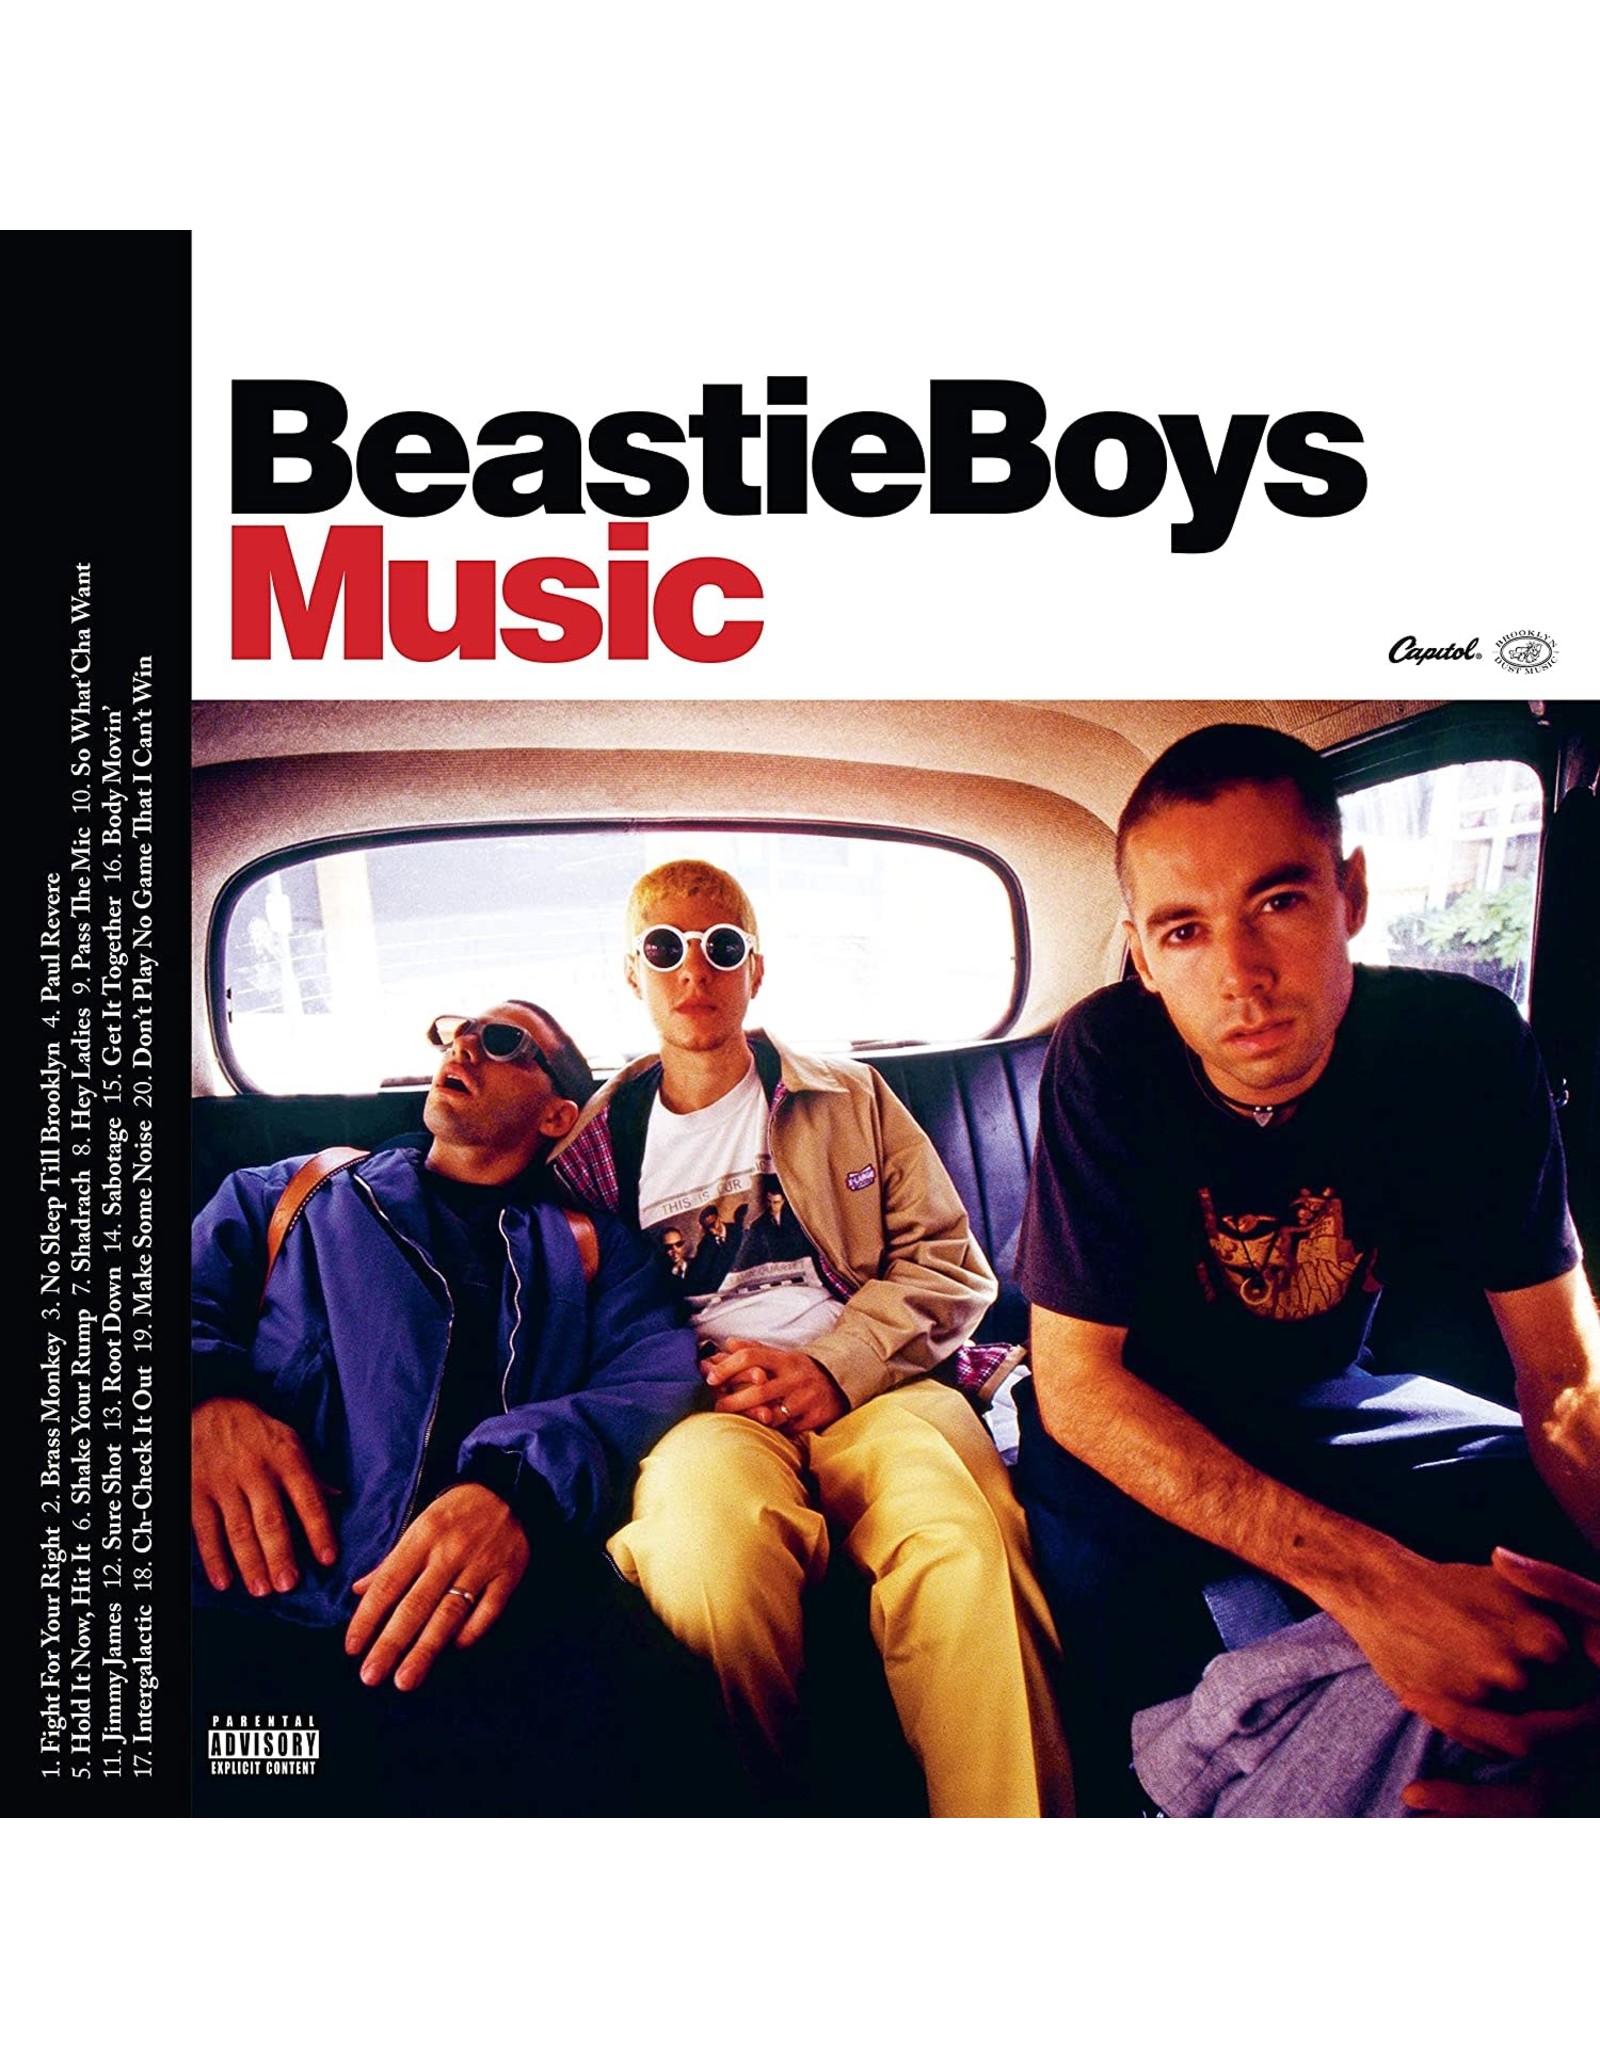 Beastie Boys - Beastie Boys Music (Greatest Hits)